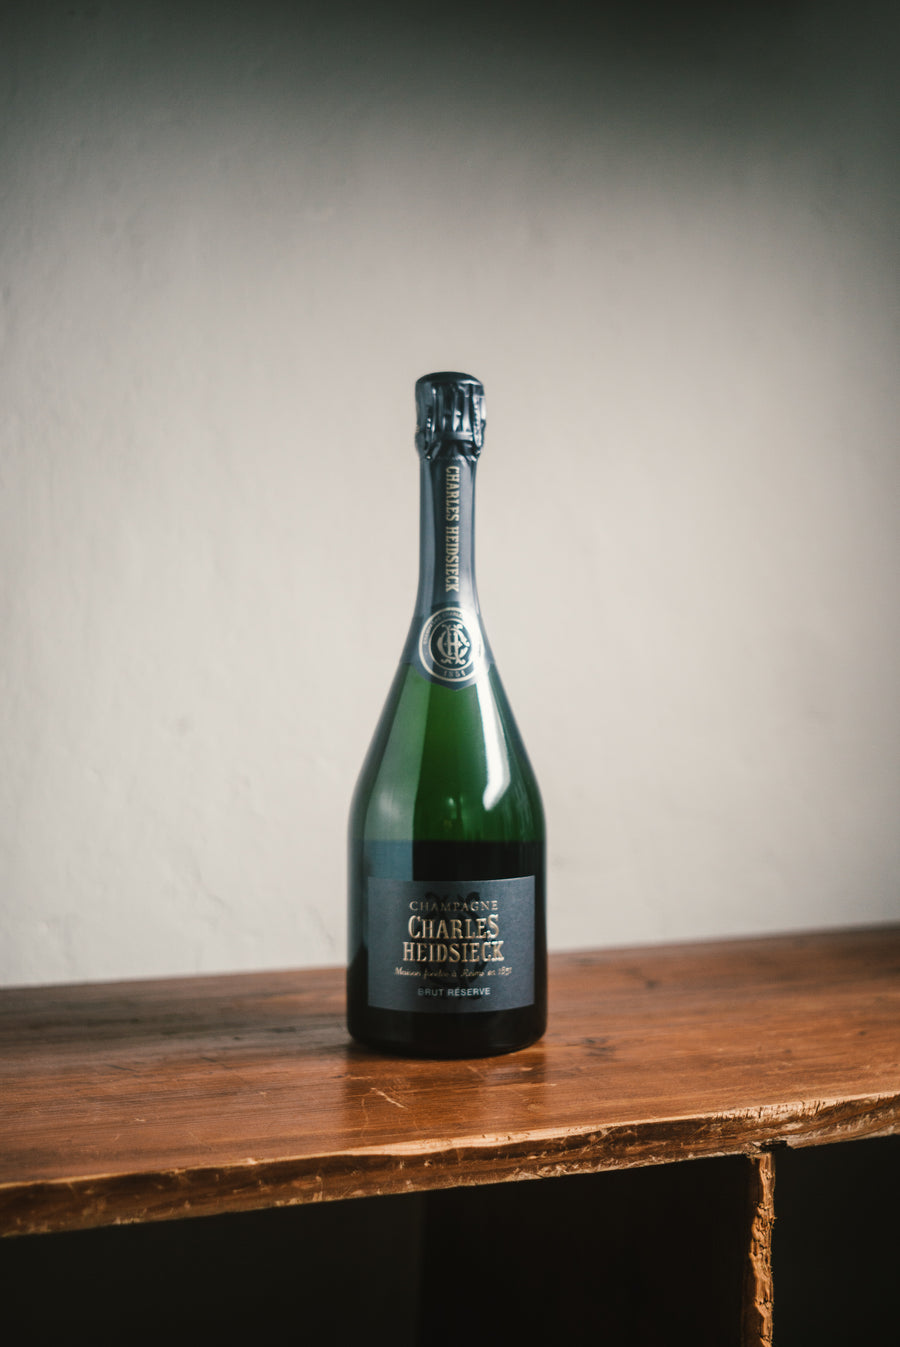 Brut Reserve Champagne - Charles Heidsieck